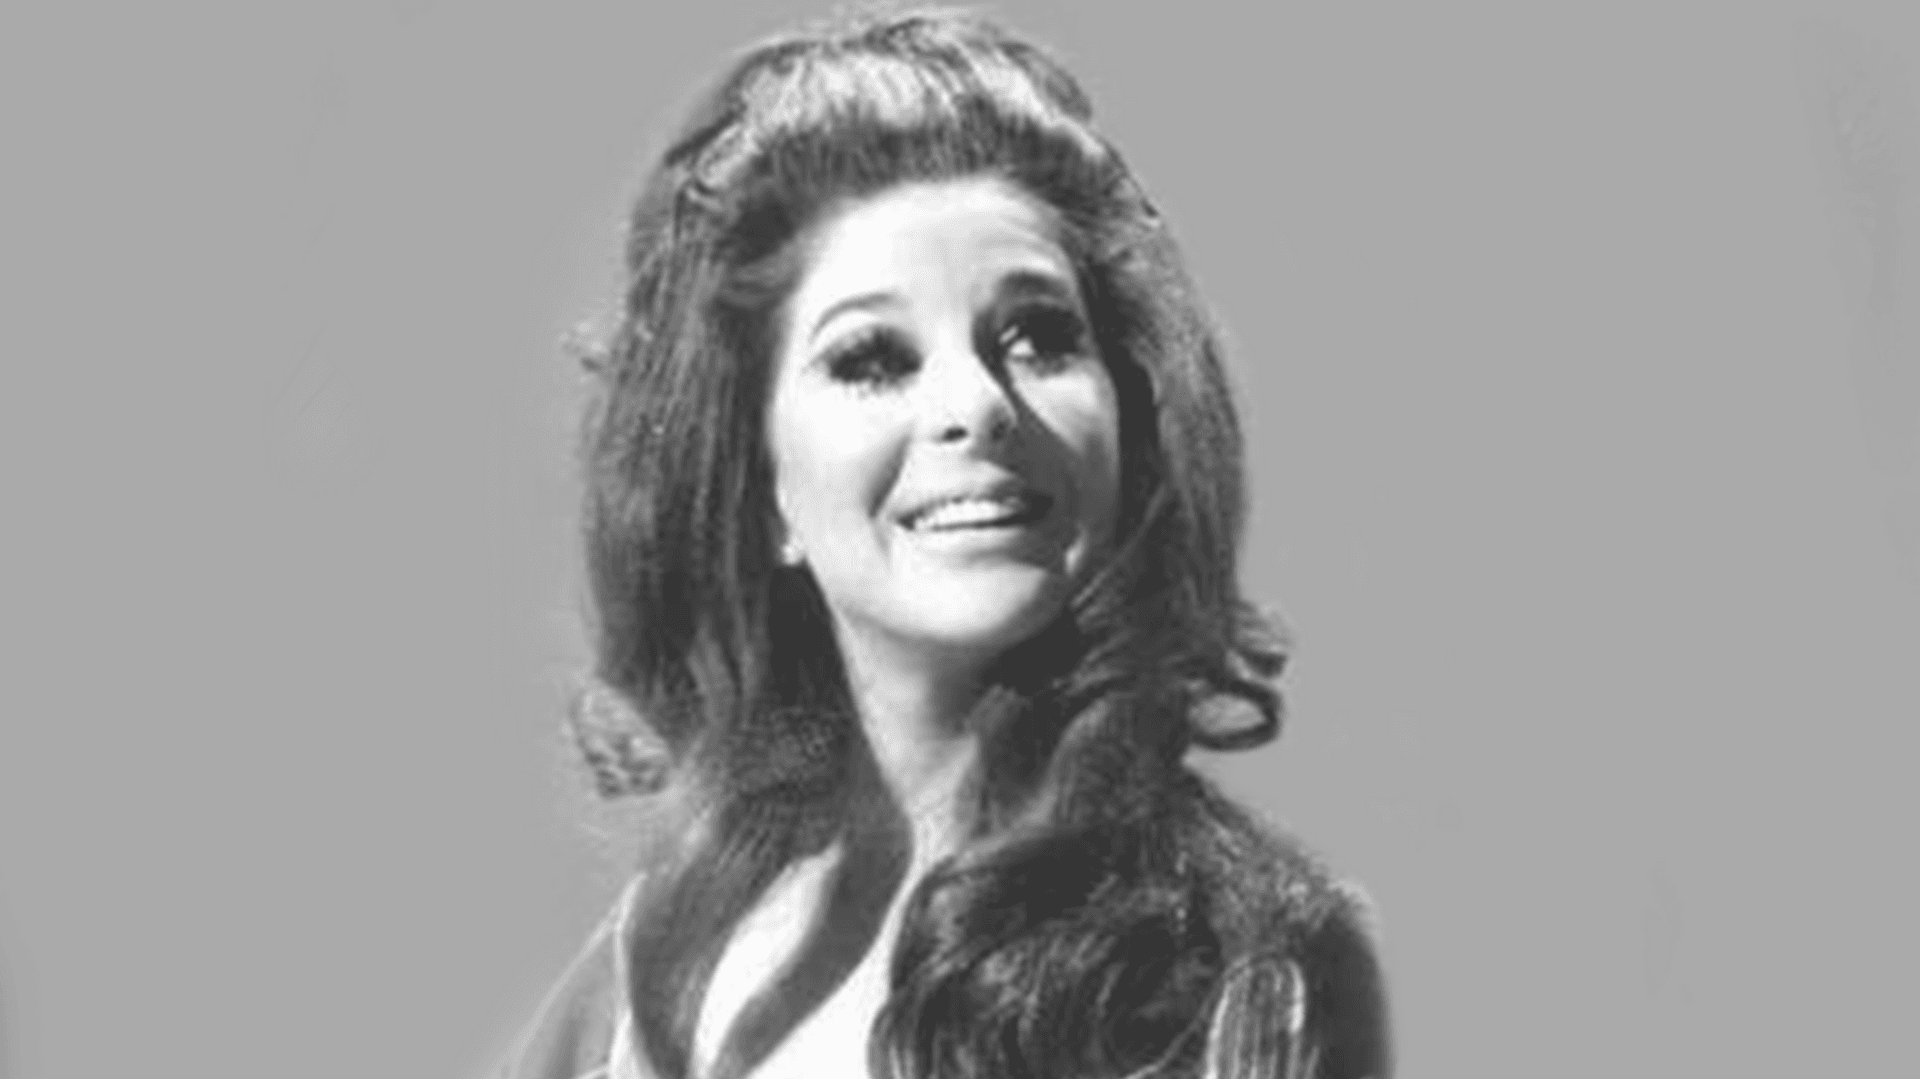 Bobbie Gentry in 1970